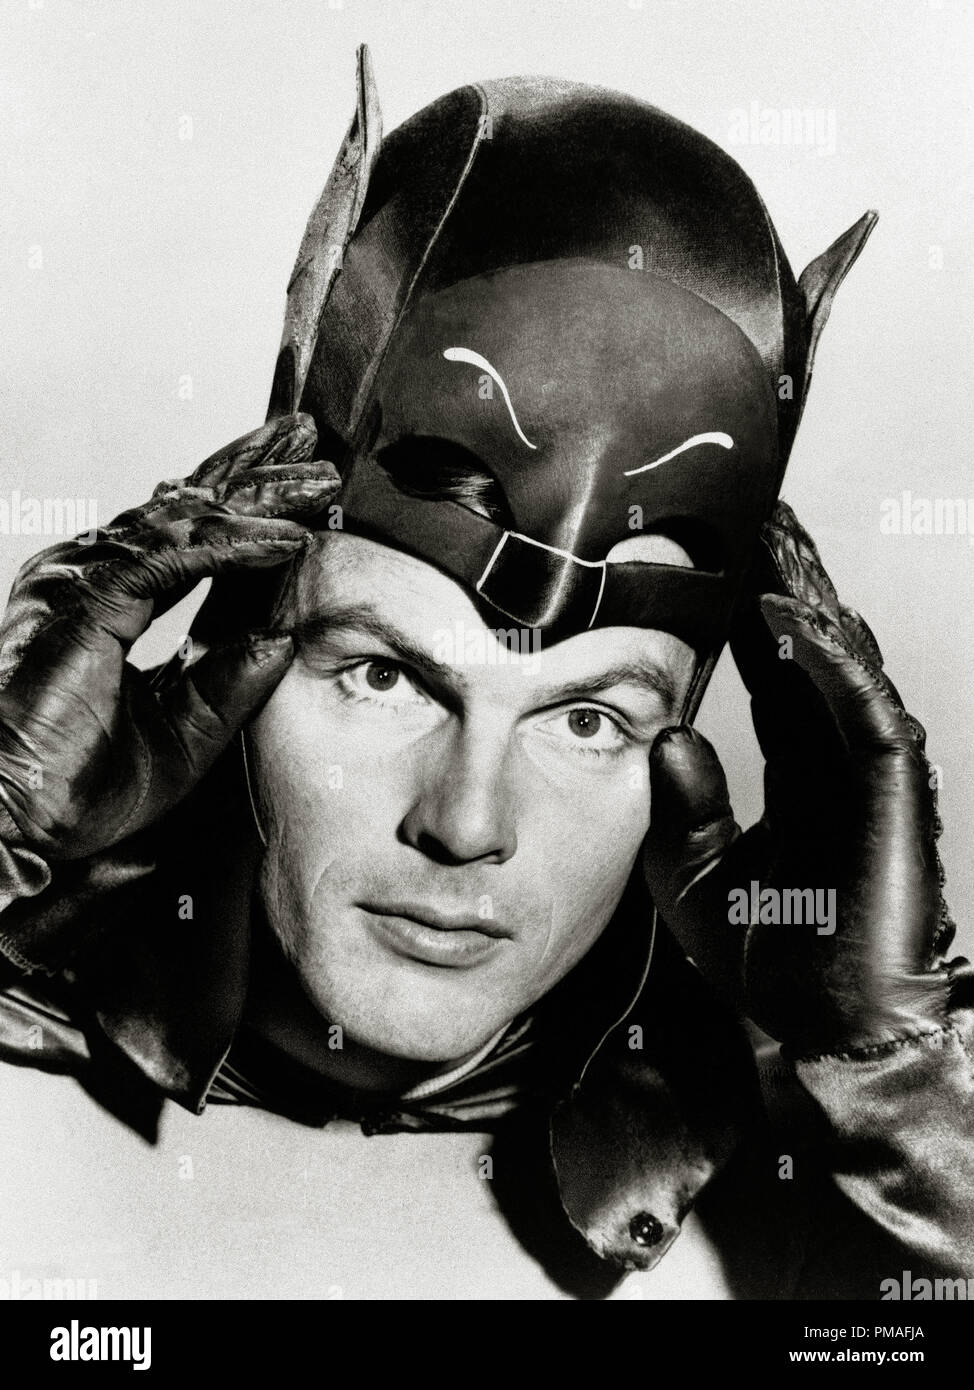 Adam West als Batman, 'Batman', 1966 Datei Referenz # 32633 646 THA Stockfoto